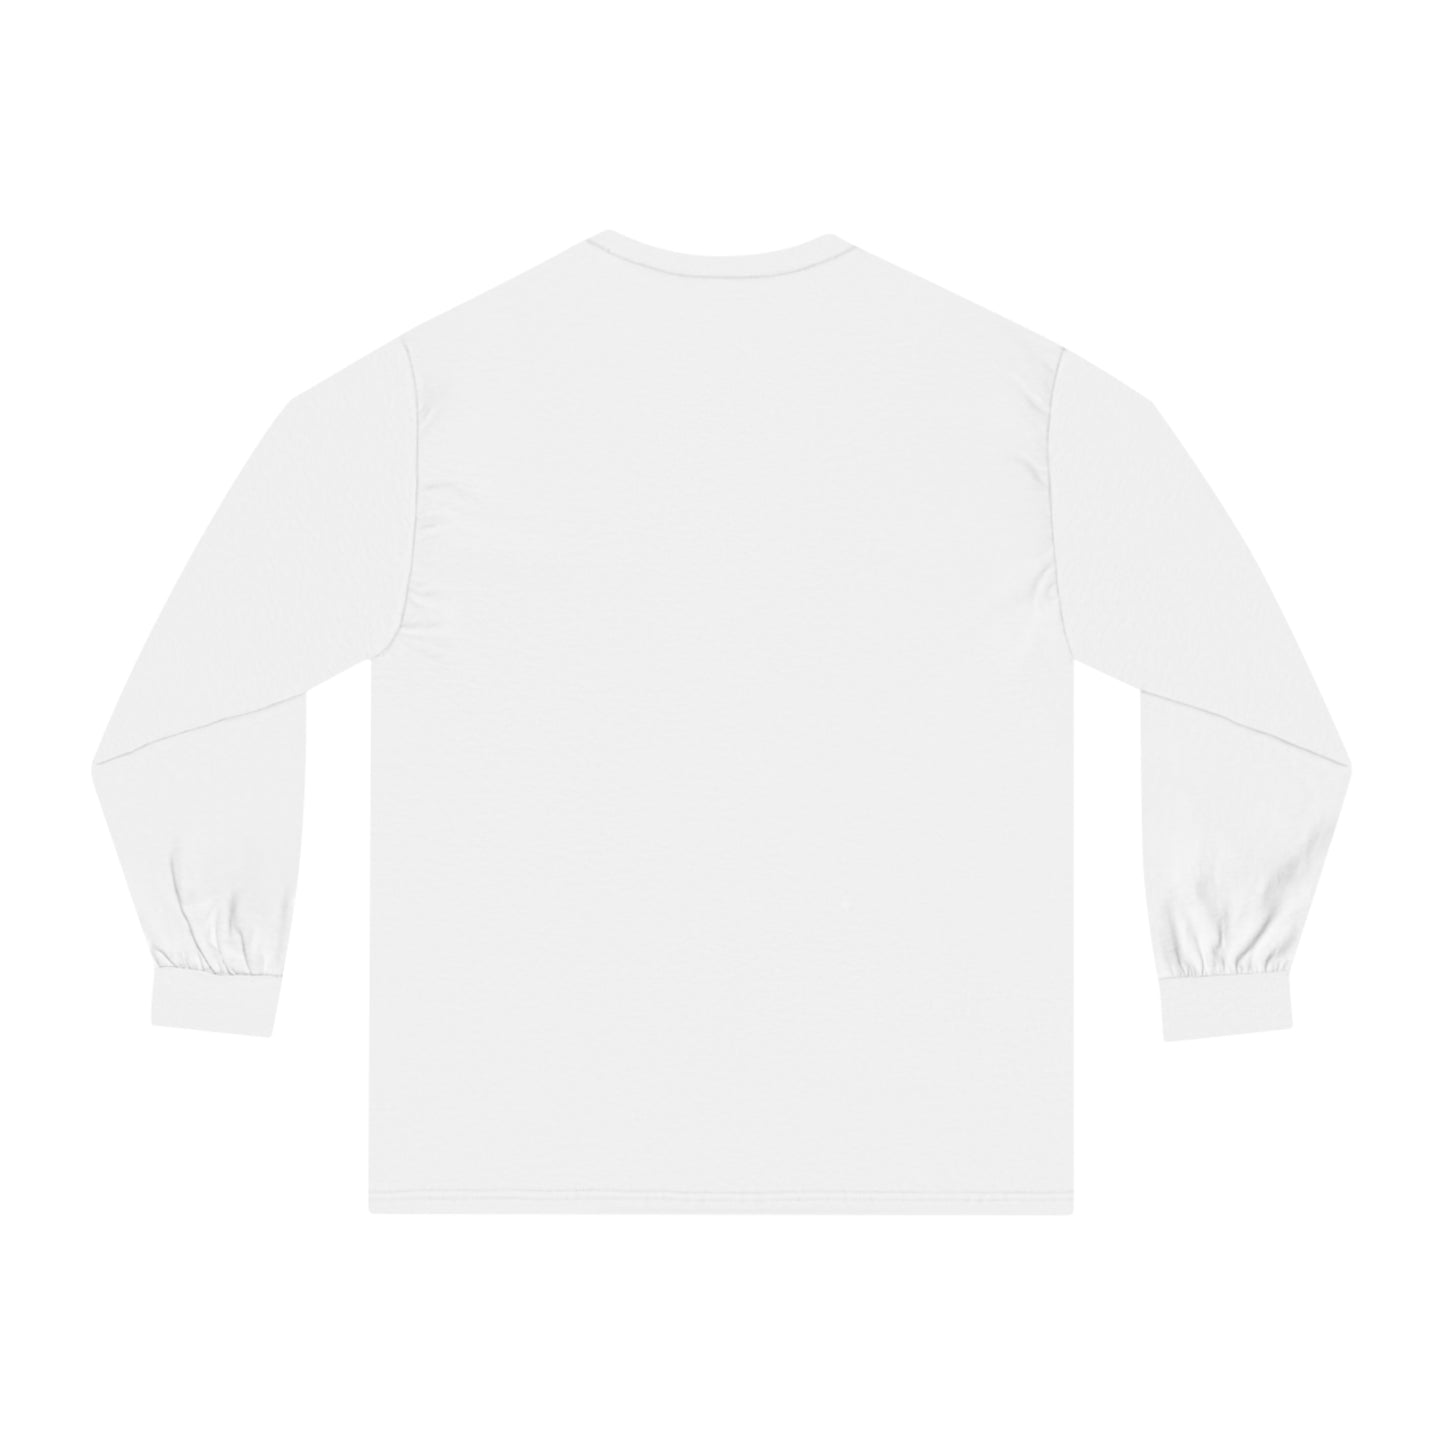 Heroshin's Unisex Classic Long Sleeve T-Shirt